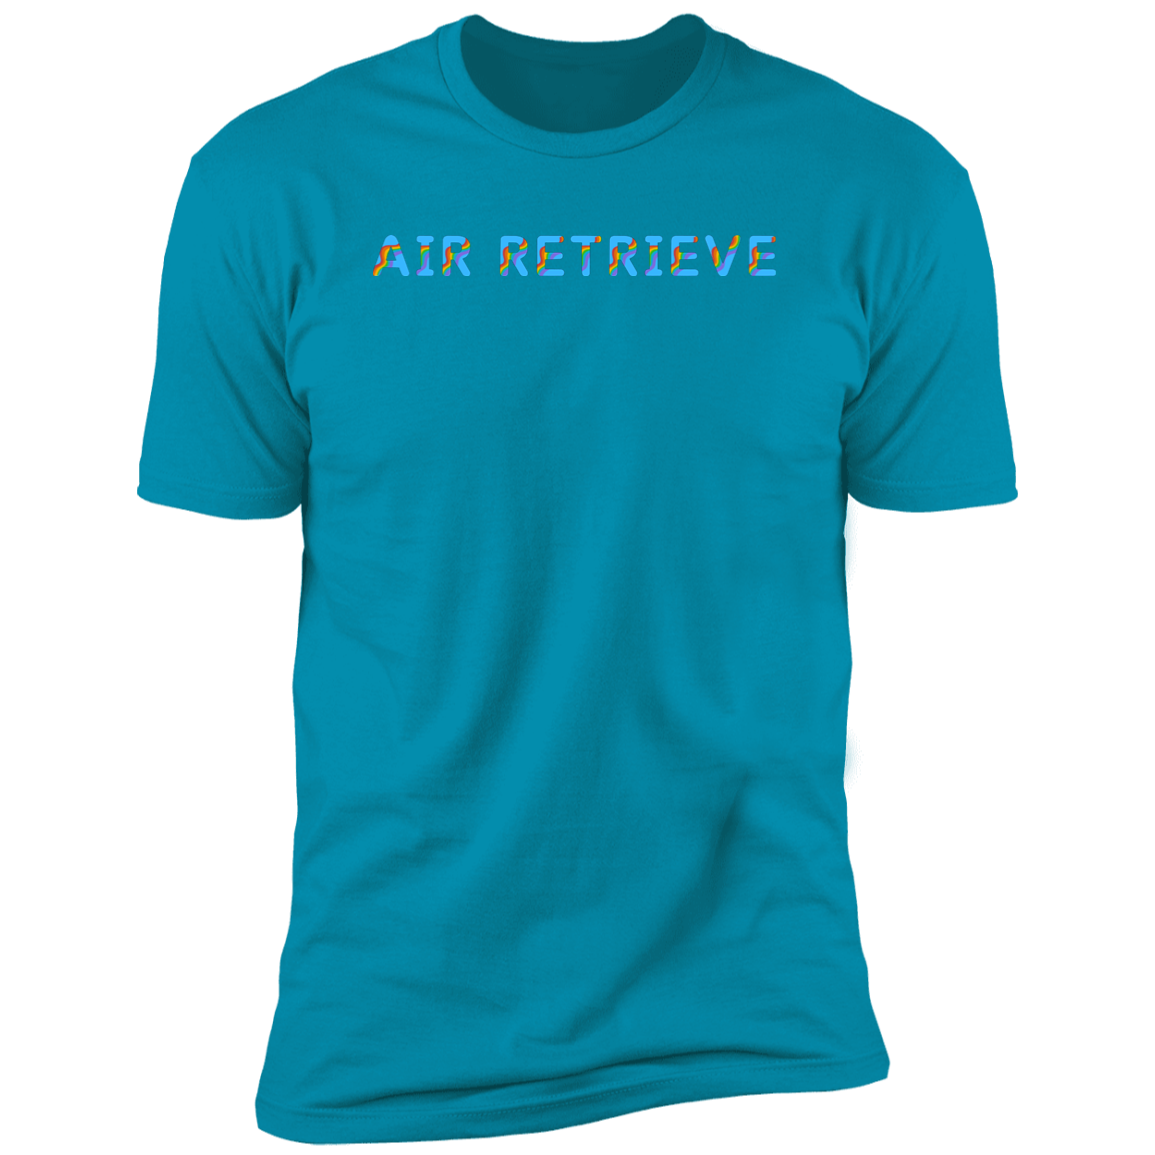 Air Retrieve Pride Dock diving t-shirt, dog pride air retrieve dock diving shirt for humans, in turquoise